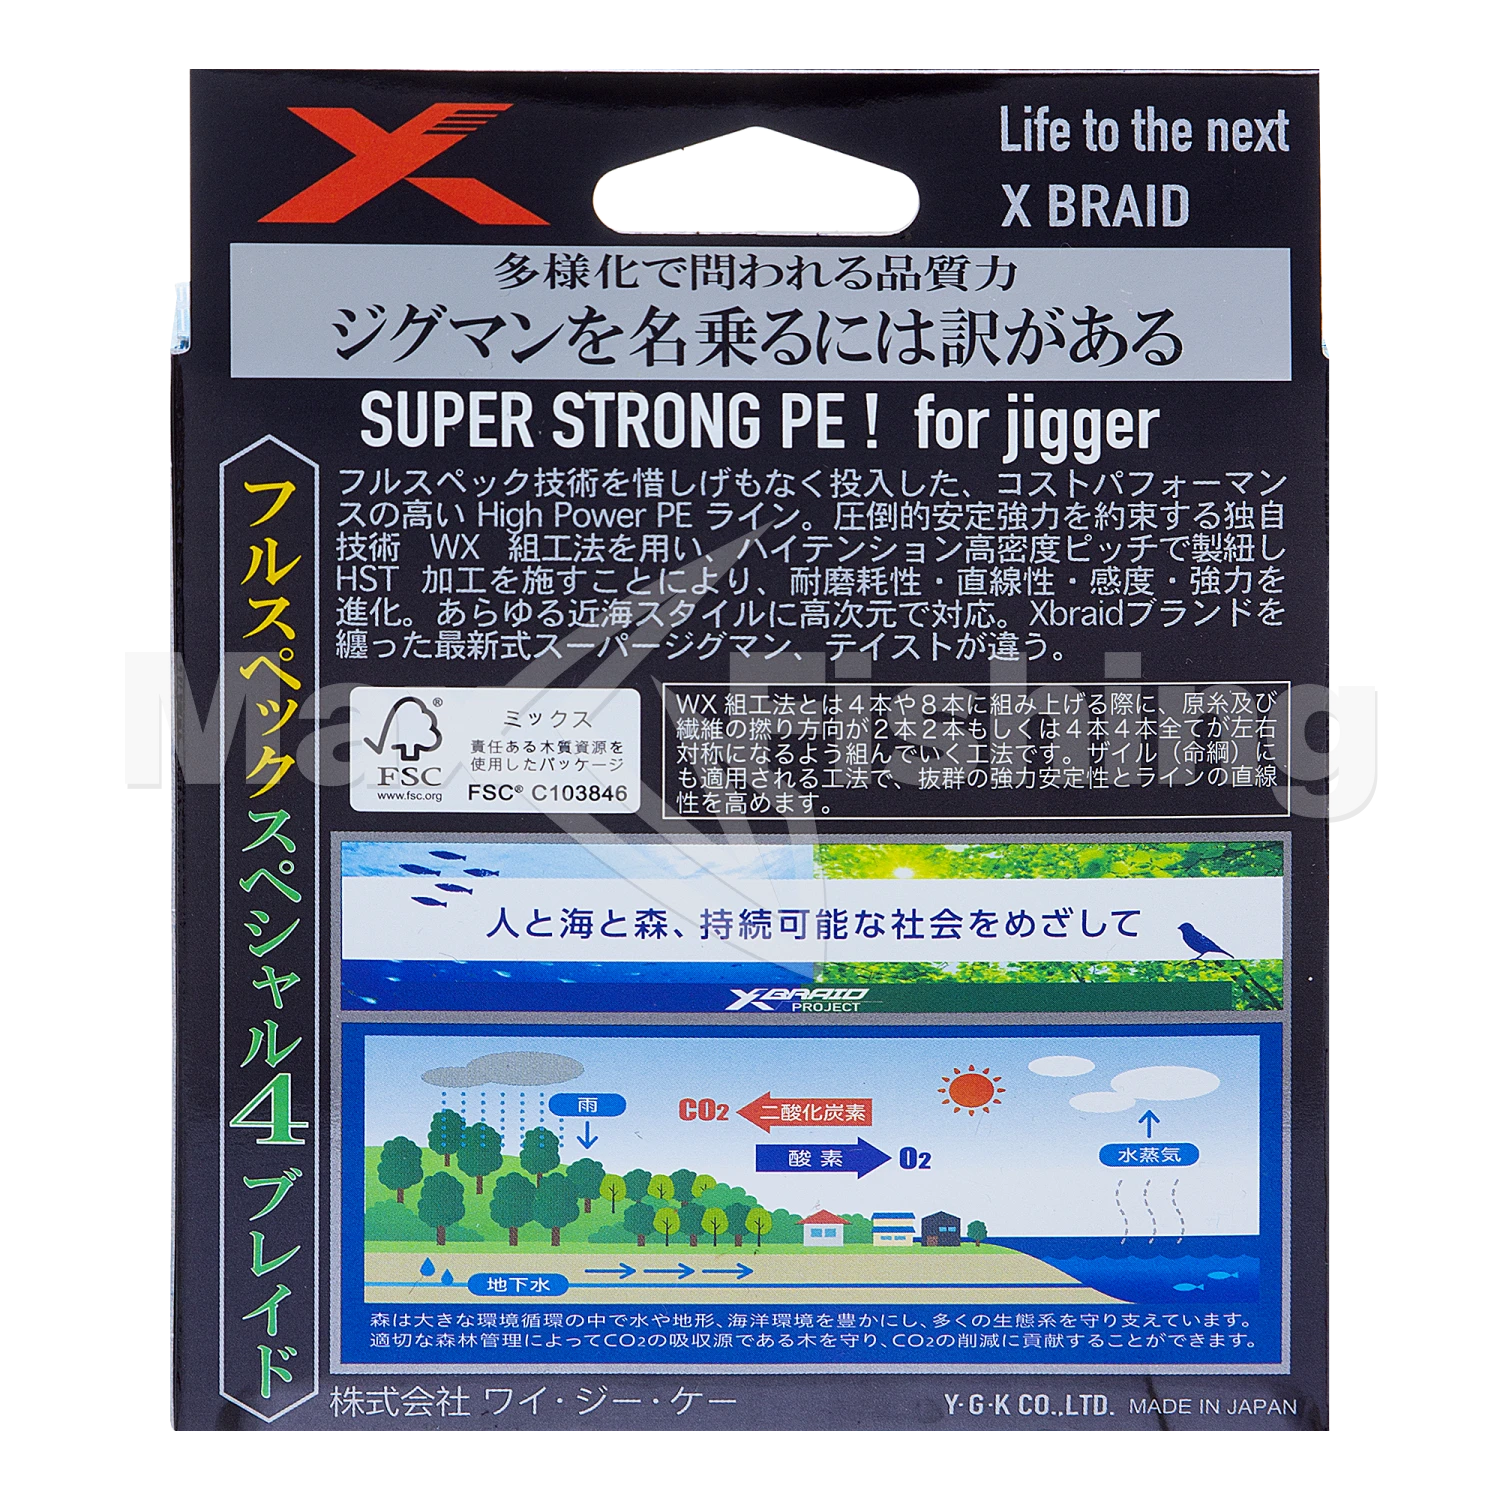 Шнур плетеный YGK X-Braid Super Jigman X4 #2 0,235мм 200м (5color)